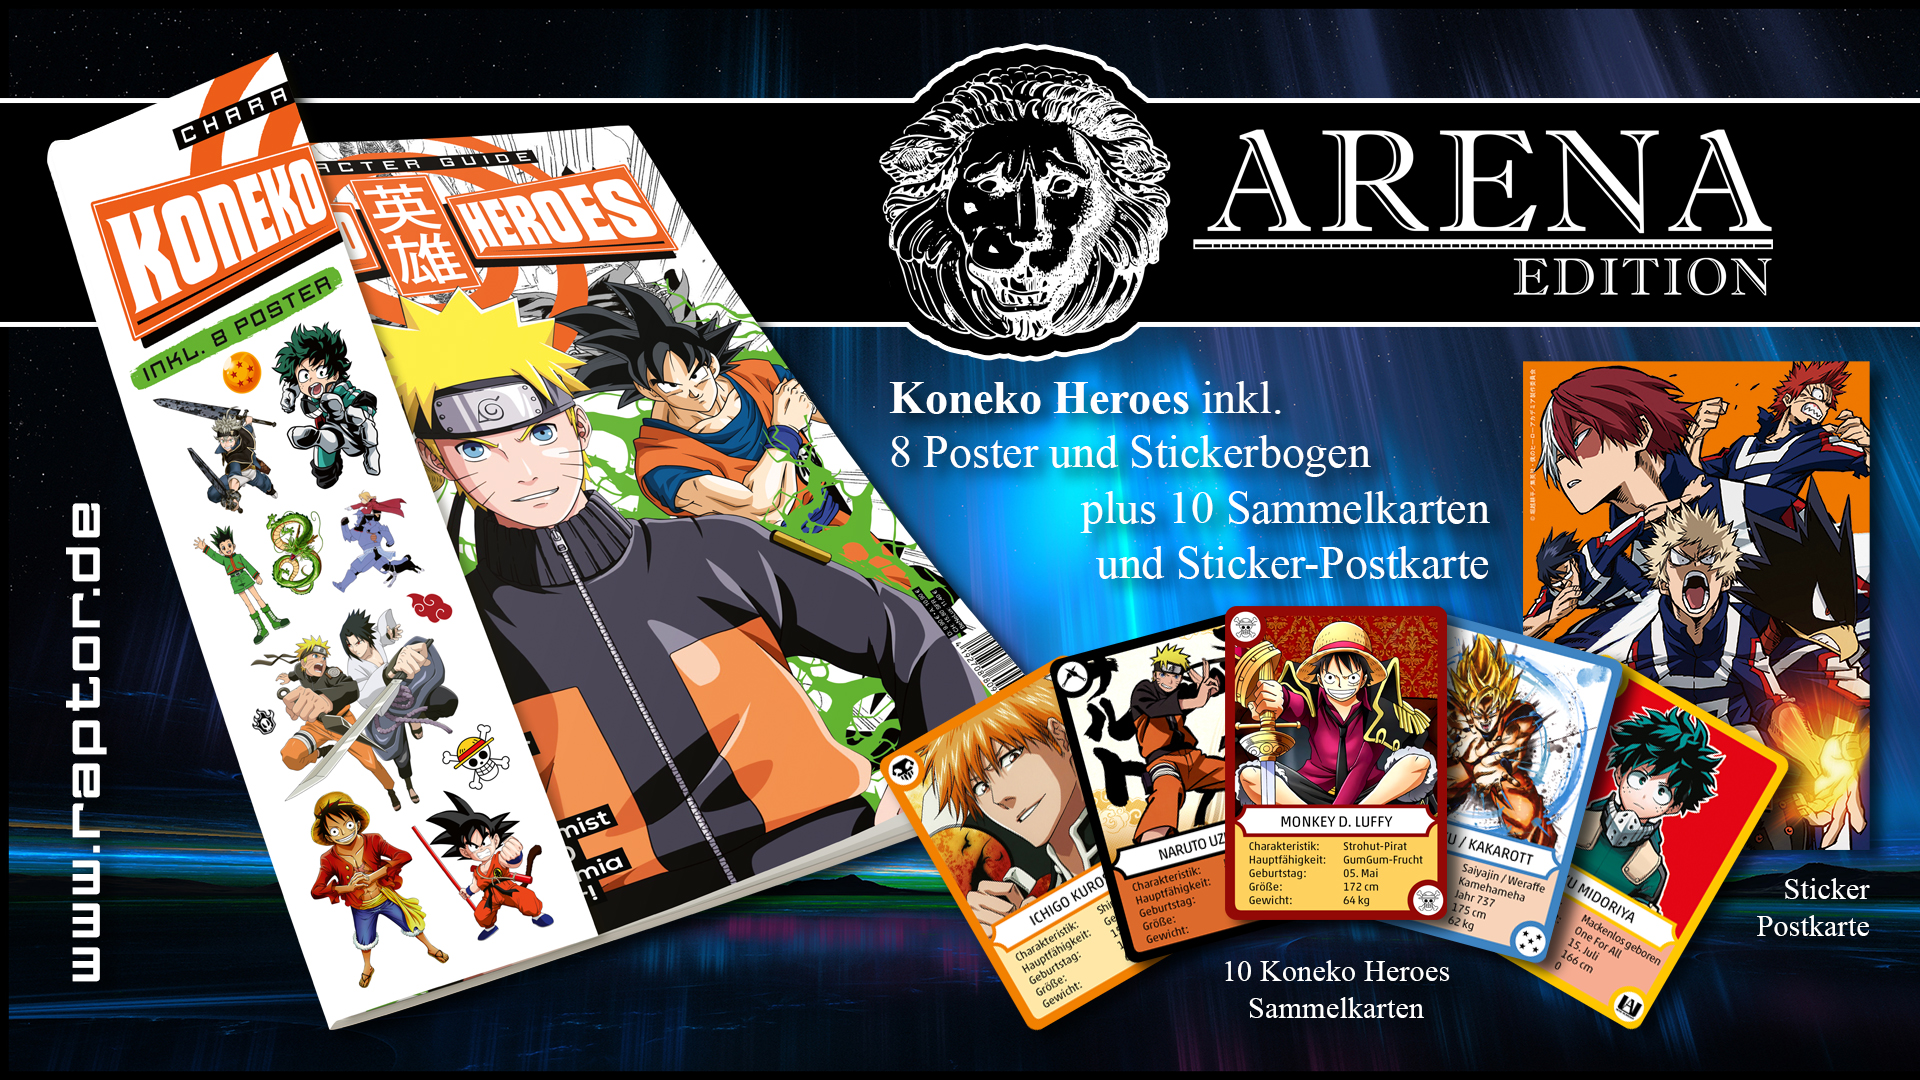 Koneko Heroes Arena Edition